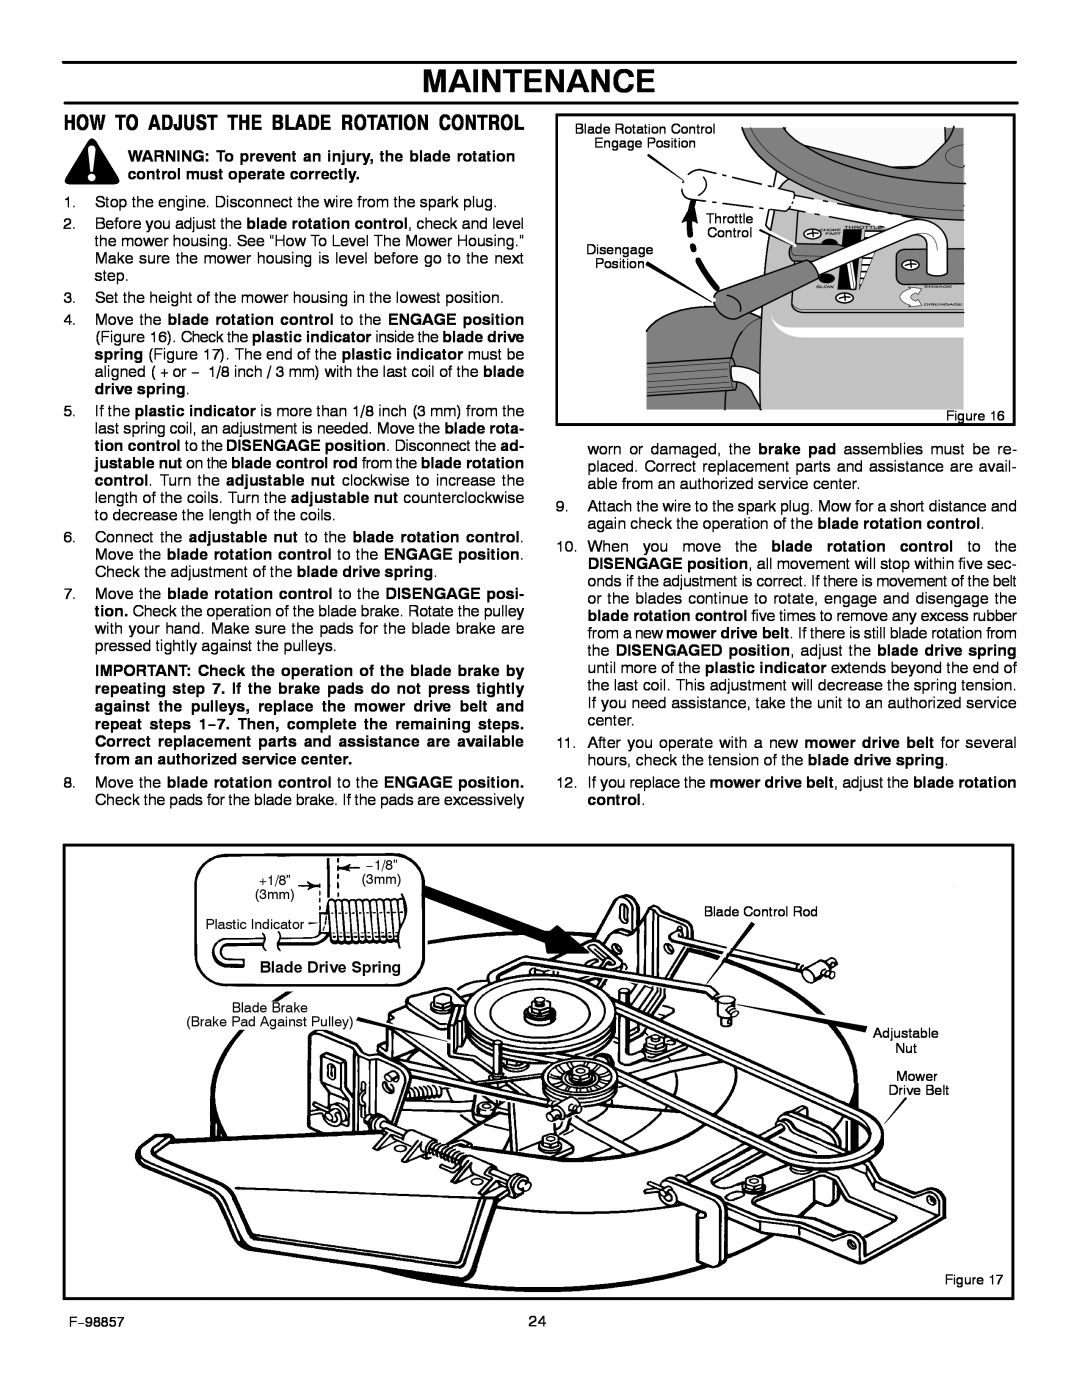 Hayter Mowers 30-Dec manual How To Adjust The Blade Rotation Control, Maintenance 